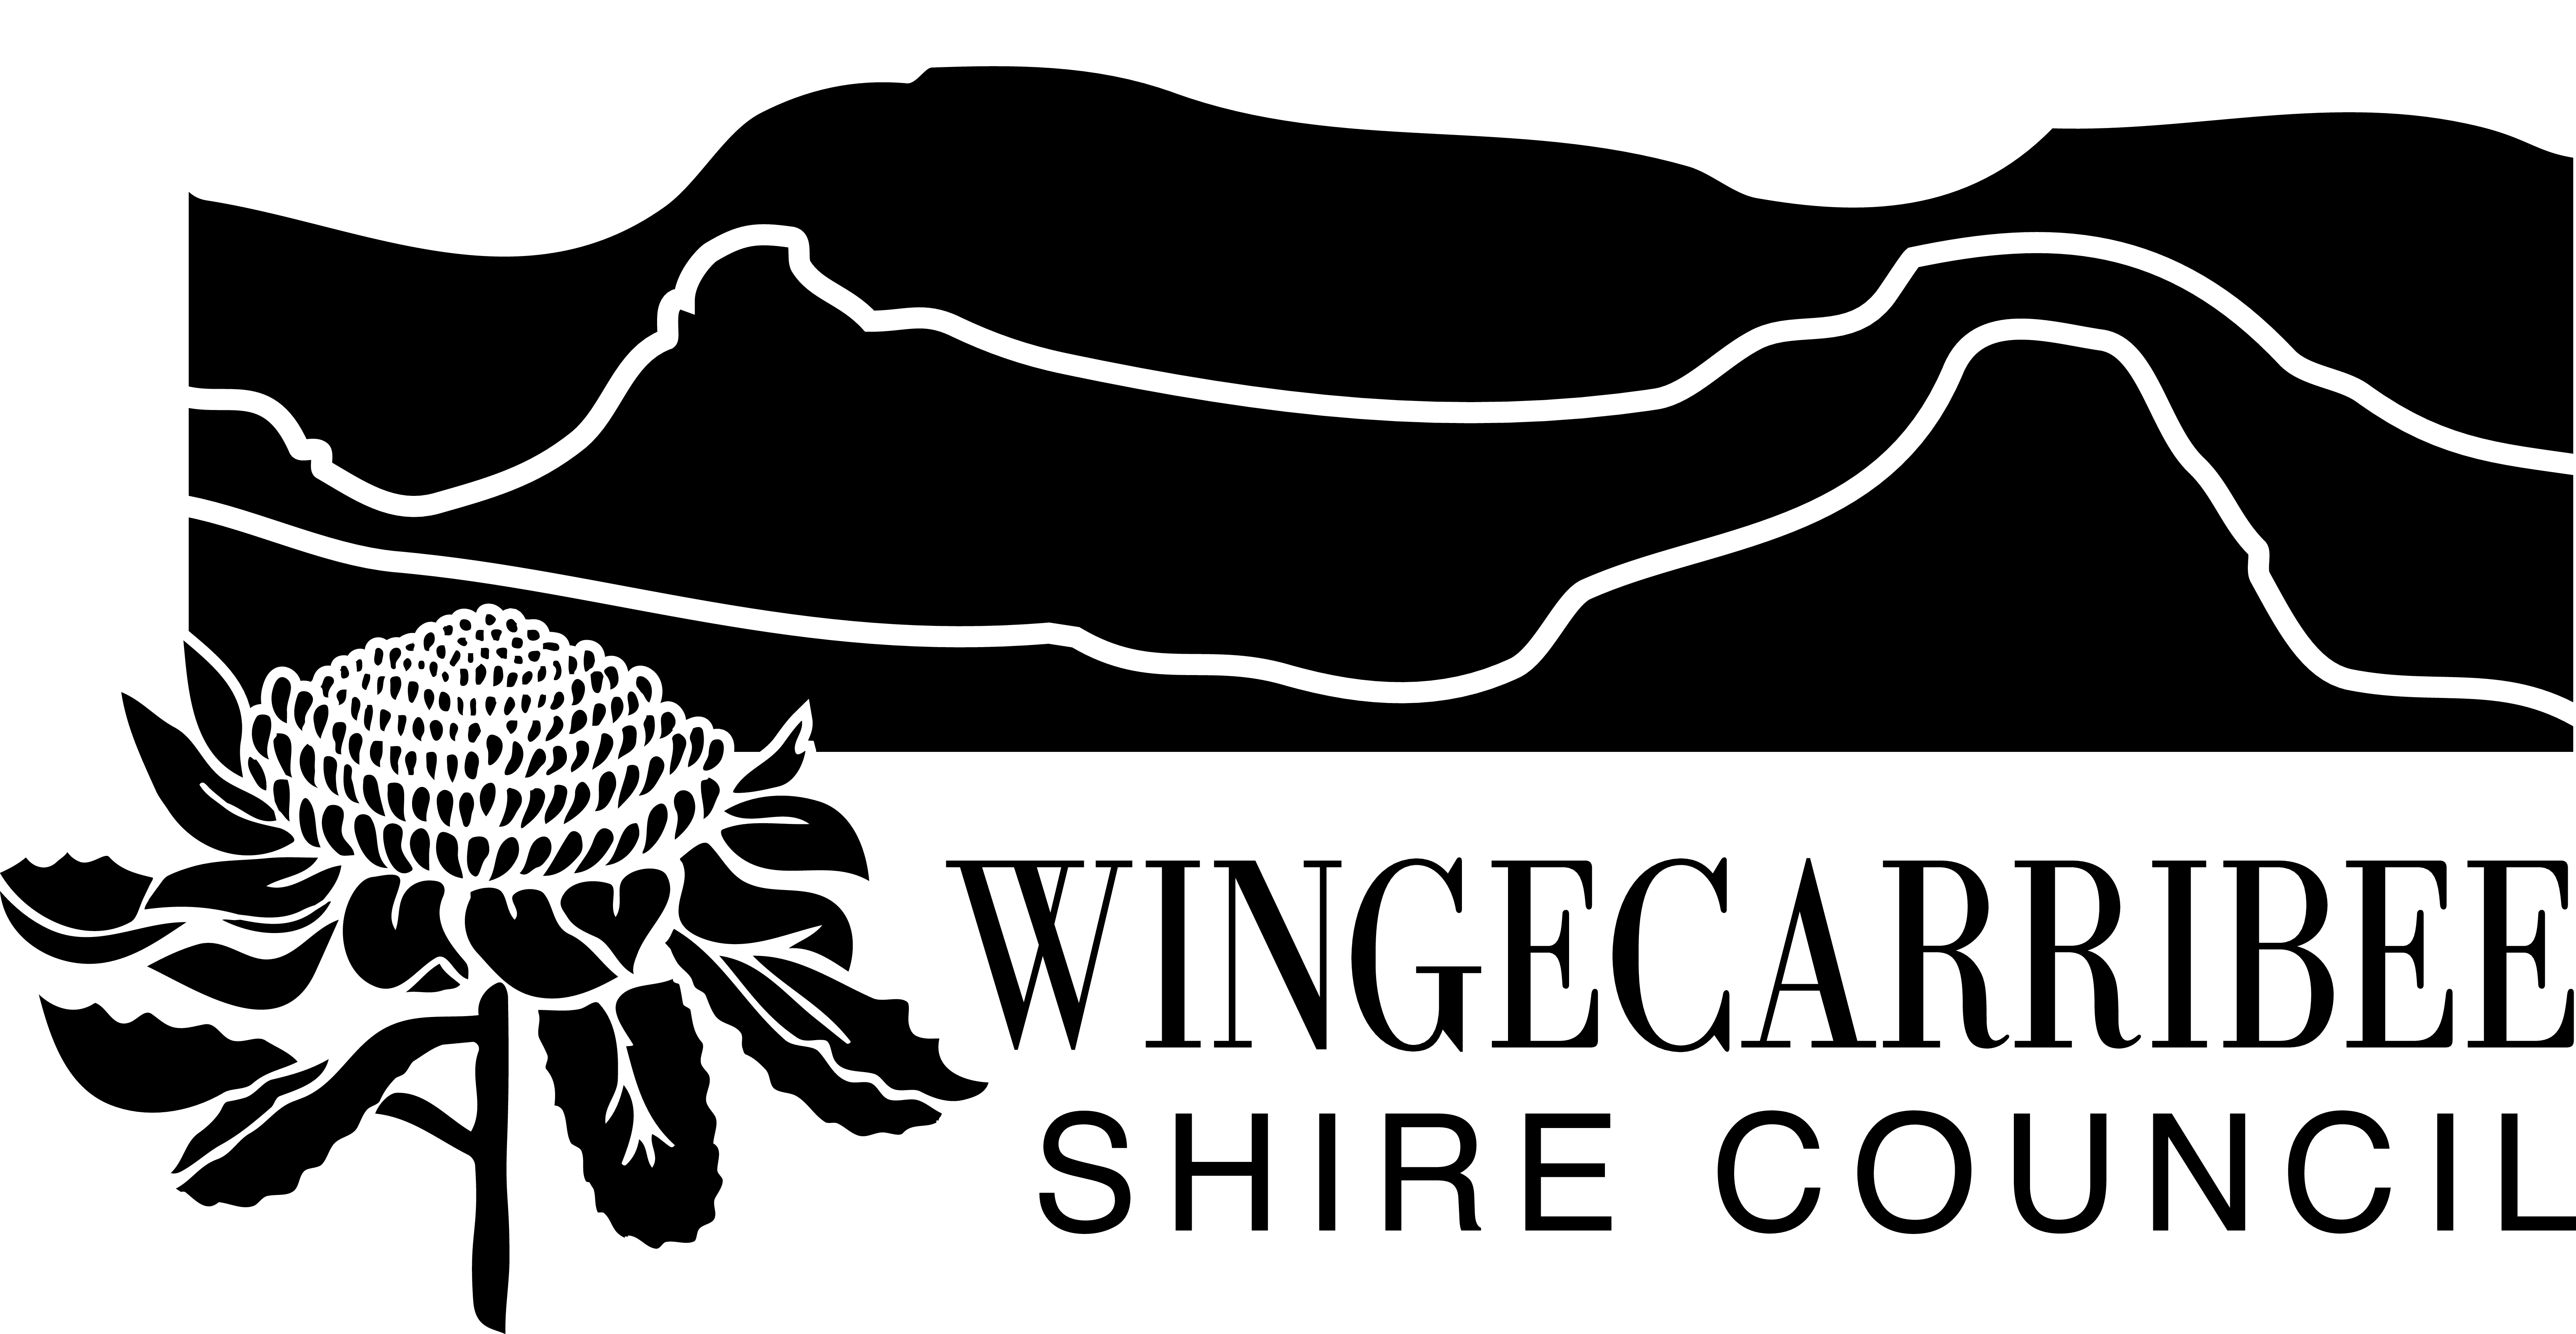 Wingecarribee Shire Council